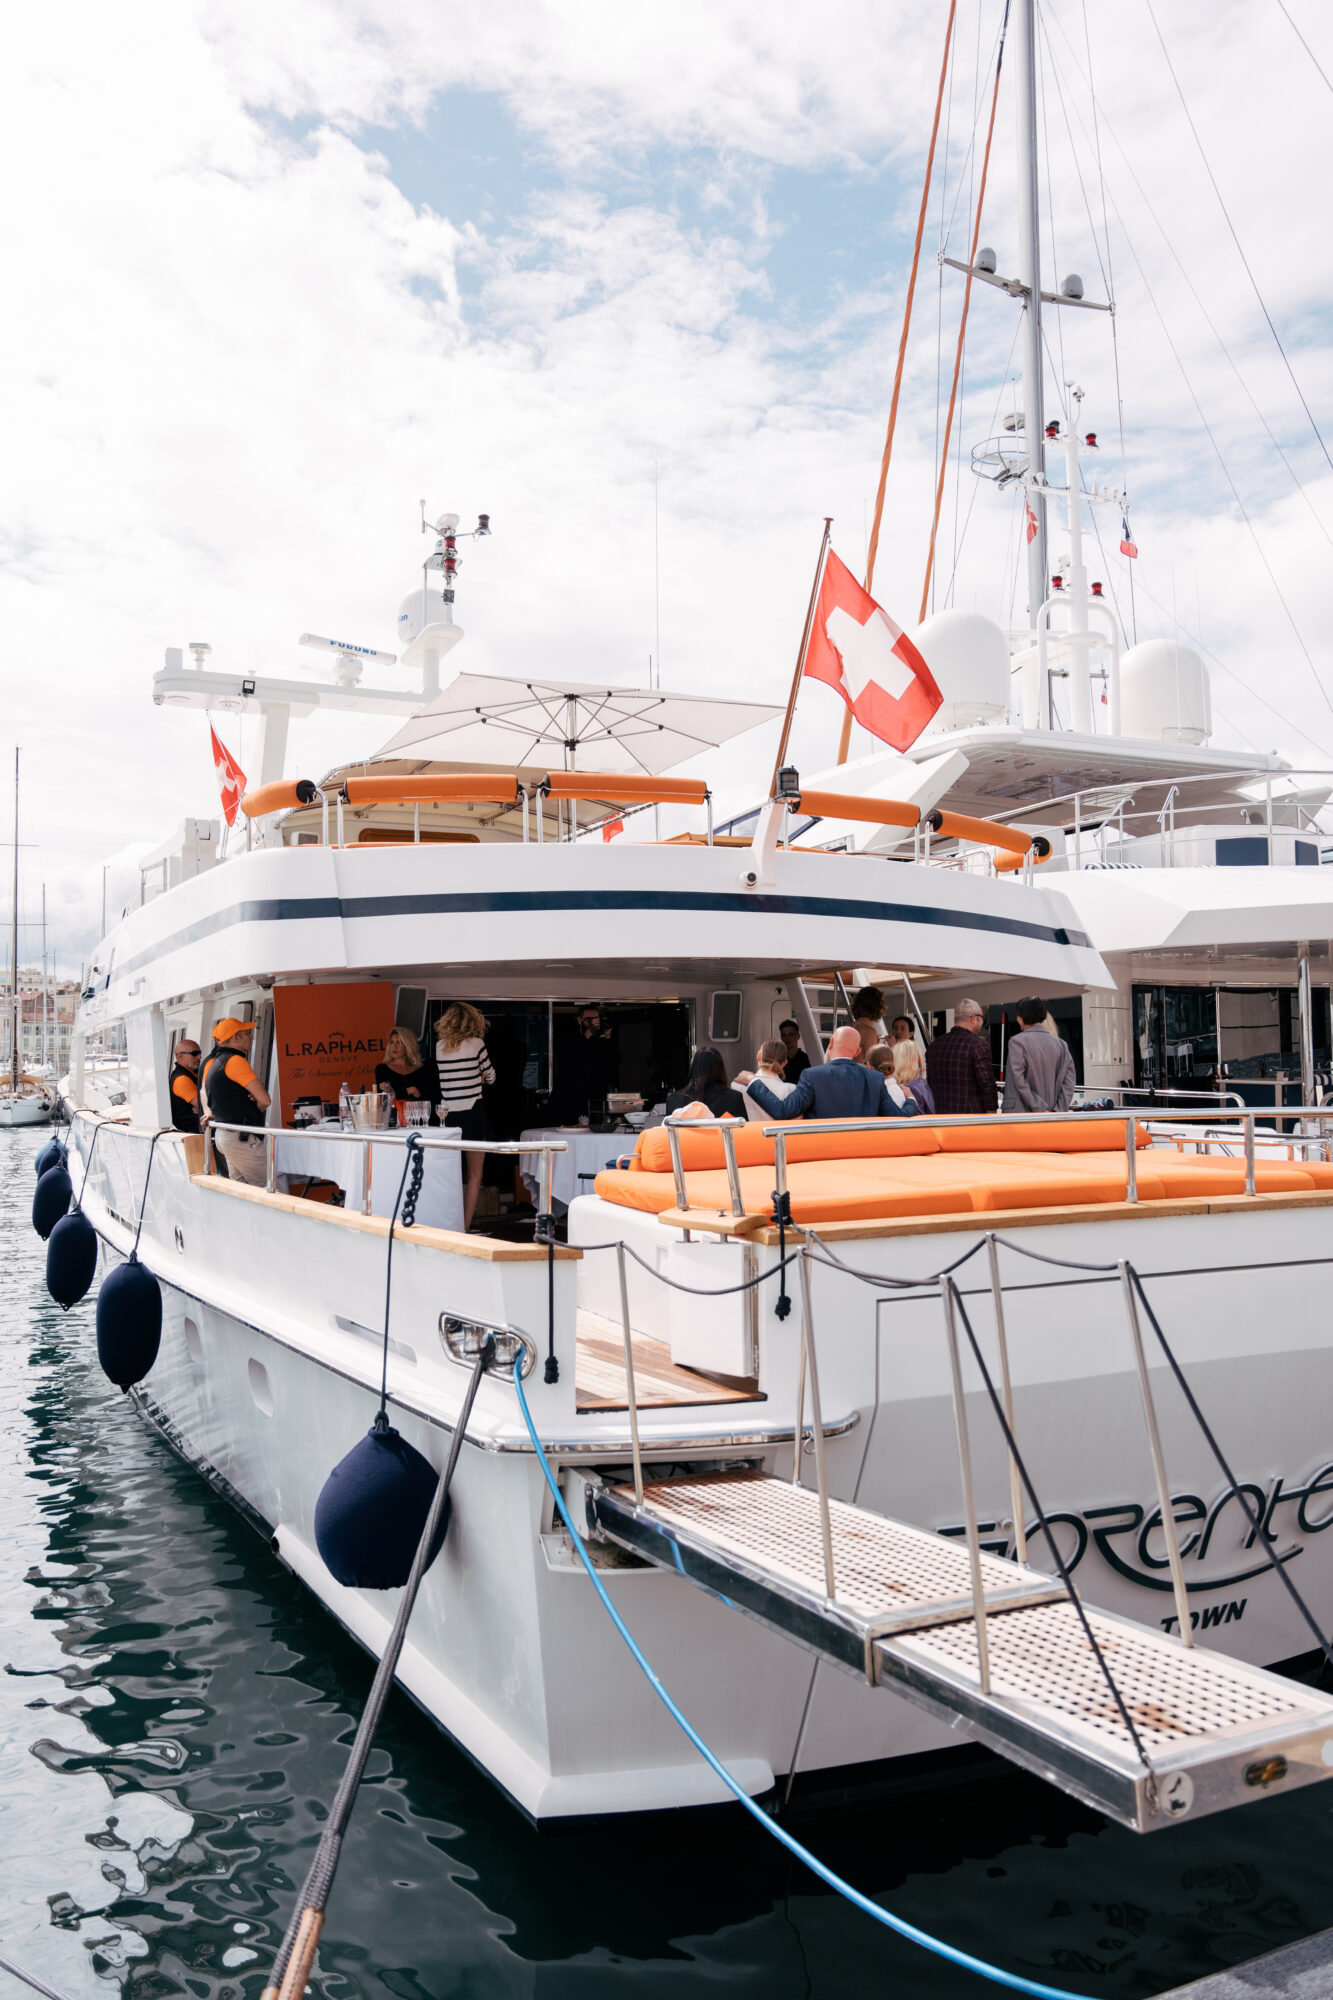 L.Raphael yacht, 76 Cannes Film Festival